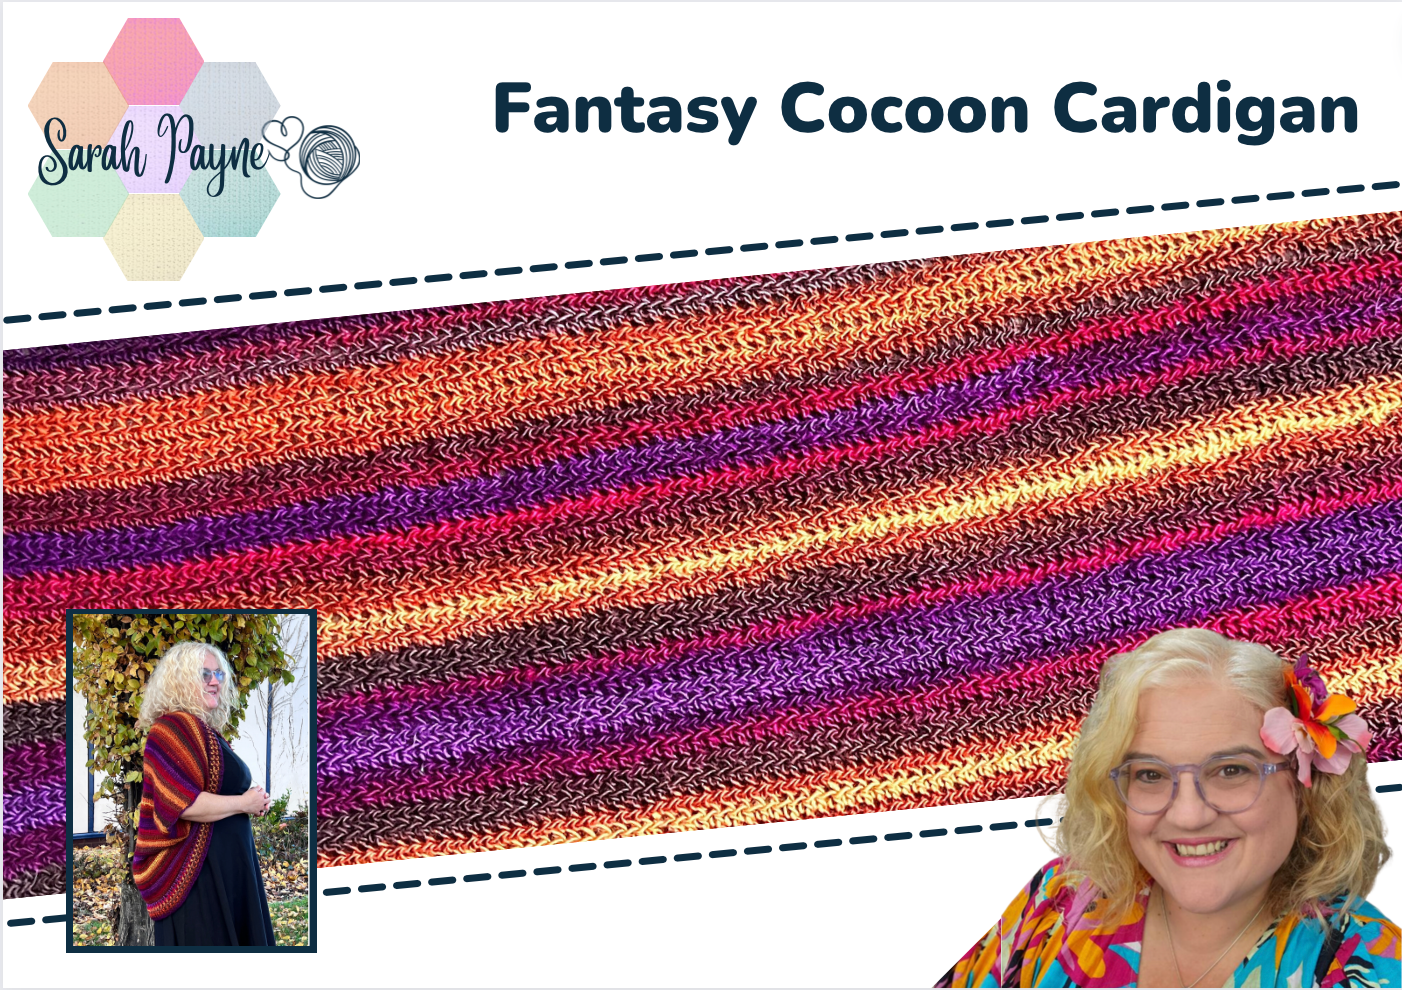 Sarah Payne Crochets Fantasy Cocoon Cardigan Pattern Booklet - DIGITAL DOWNLOAD